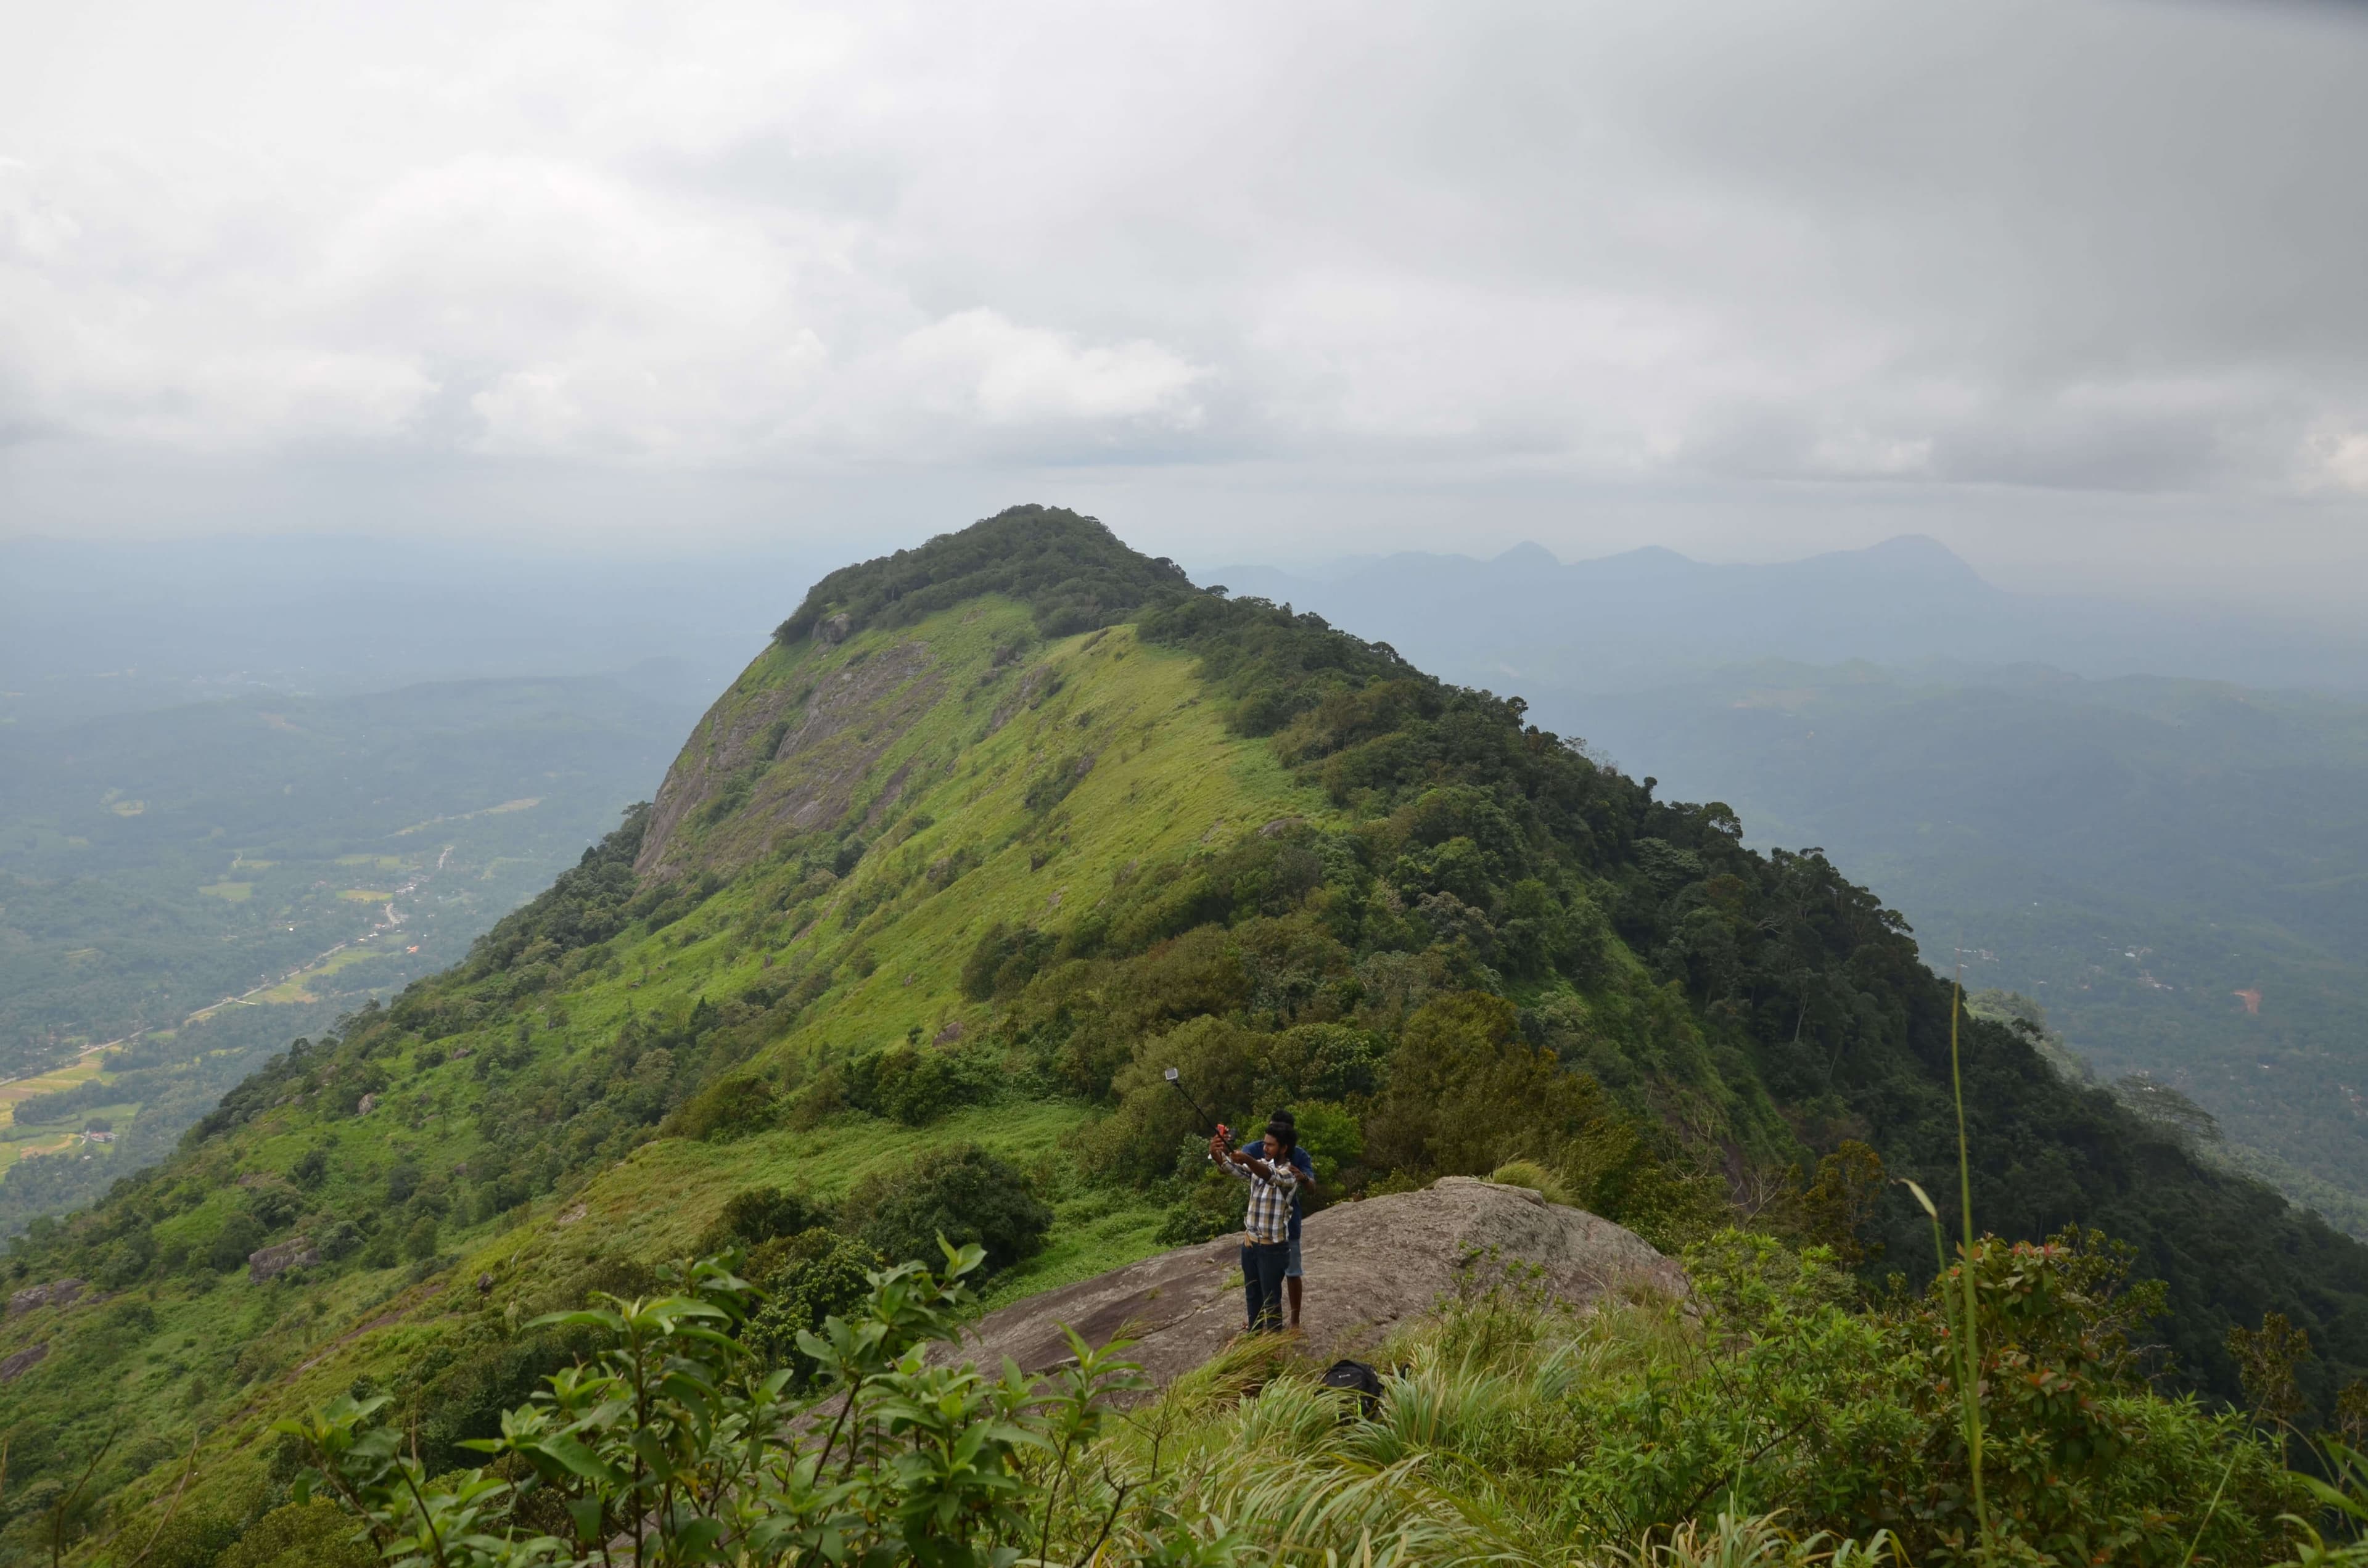 The beautiful scene of Kandy Alagalla mountain in Sri Lanka